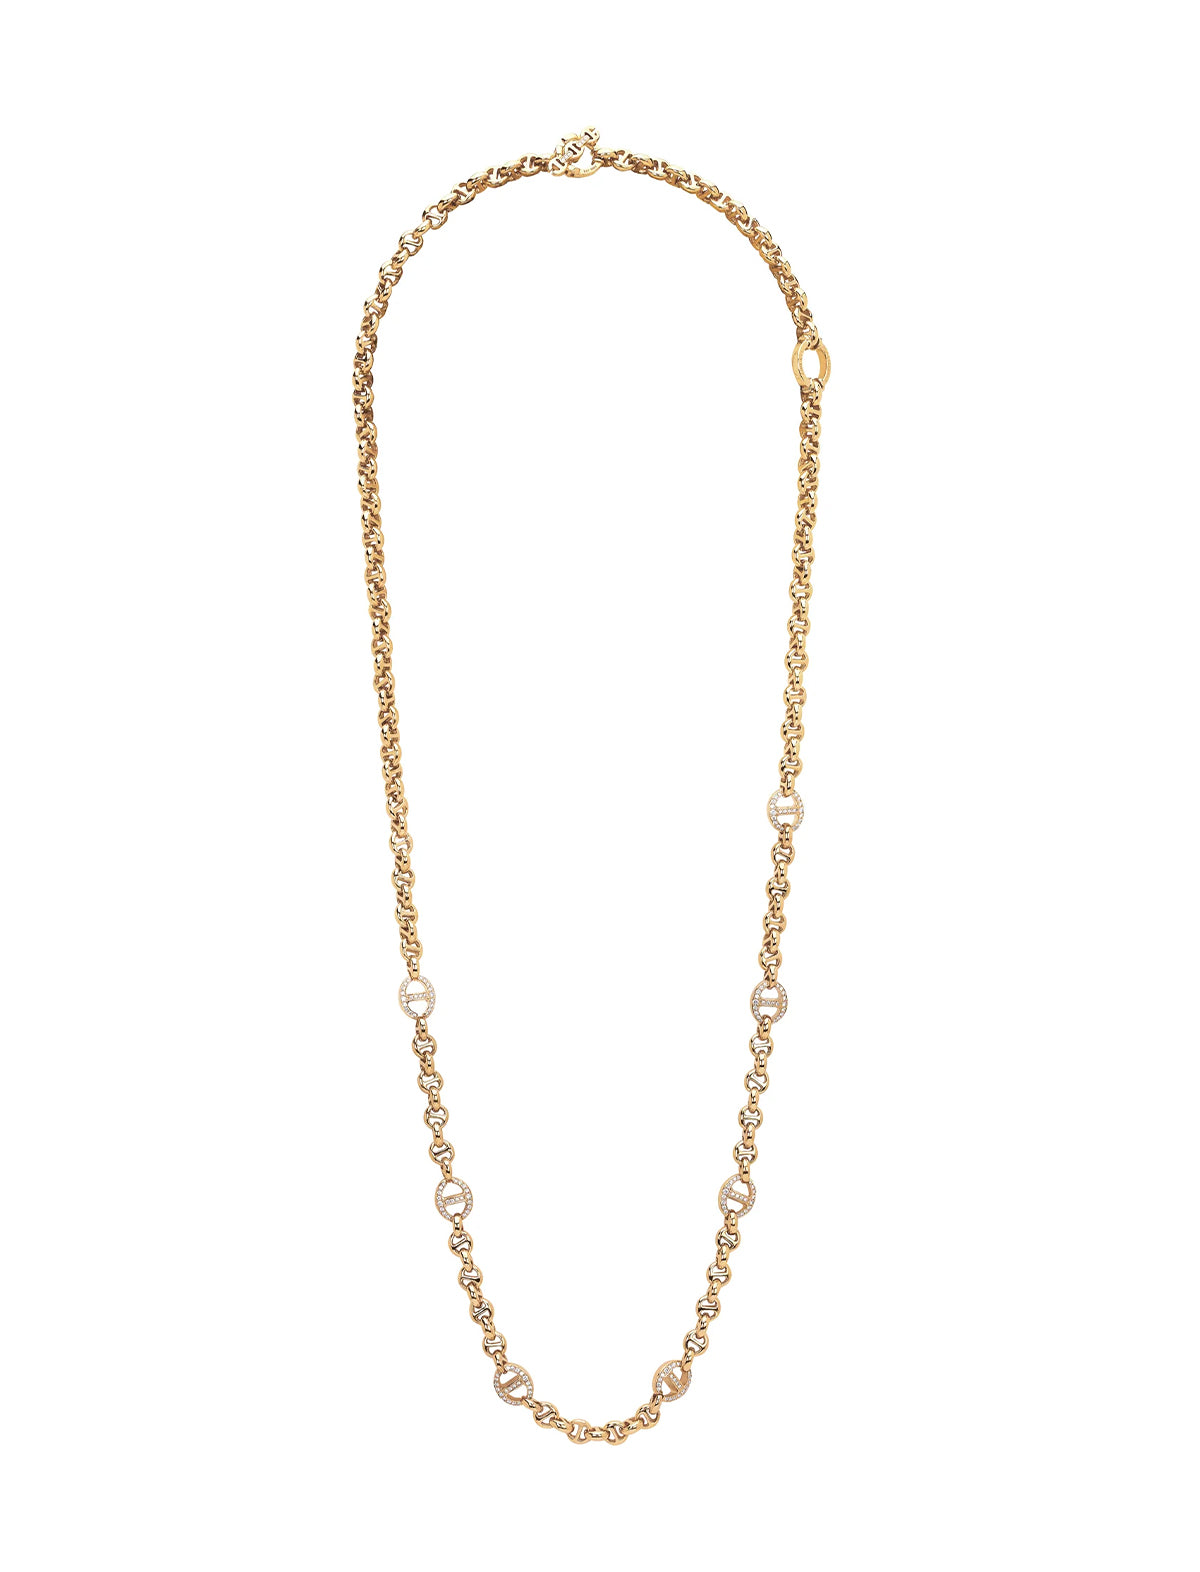 HOORSENBUHS 5mm Open-Link™ Necklace w/ Seven 10mm Links w/ Diamonds 18k Yellow Gold